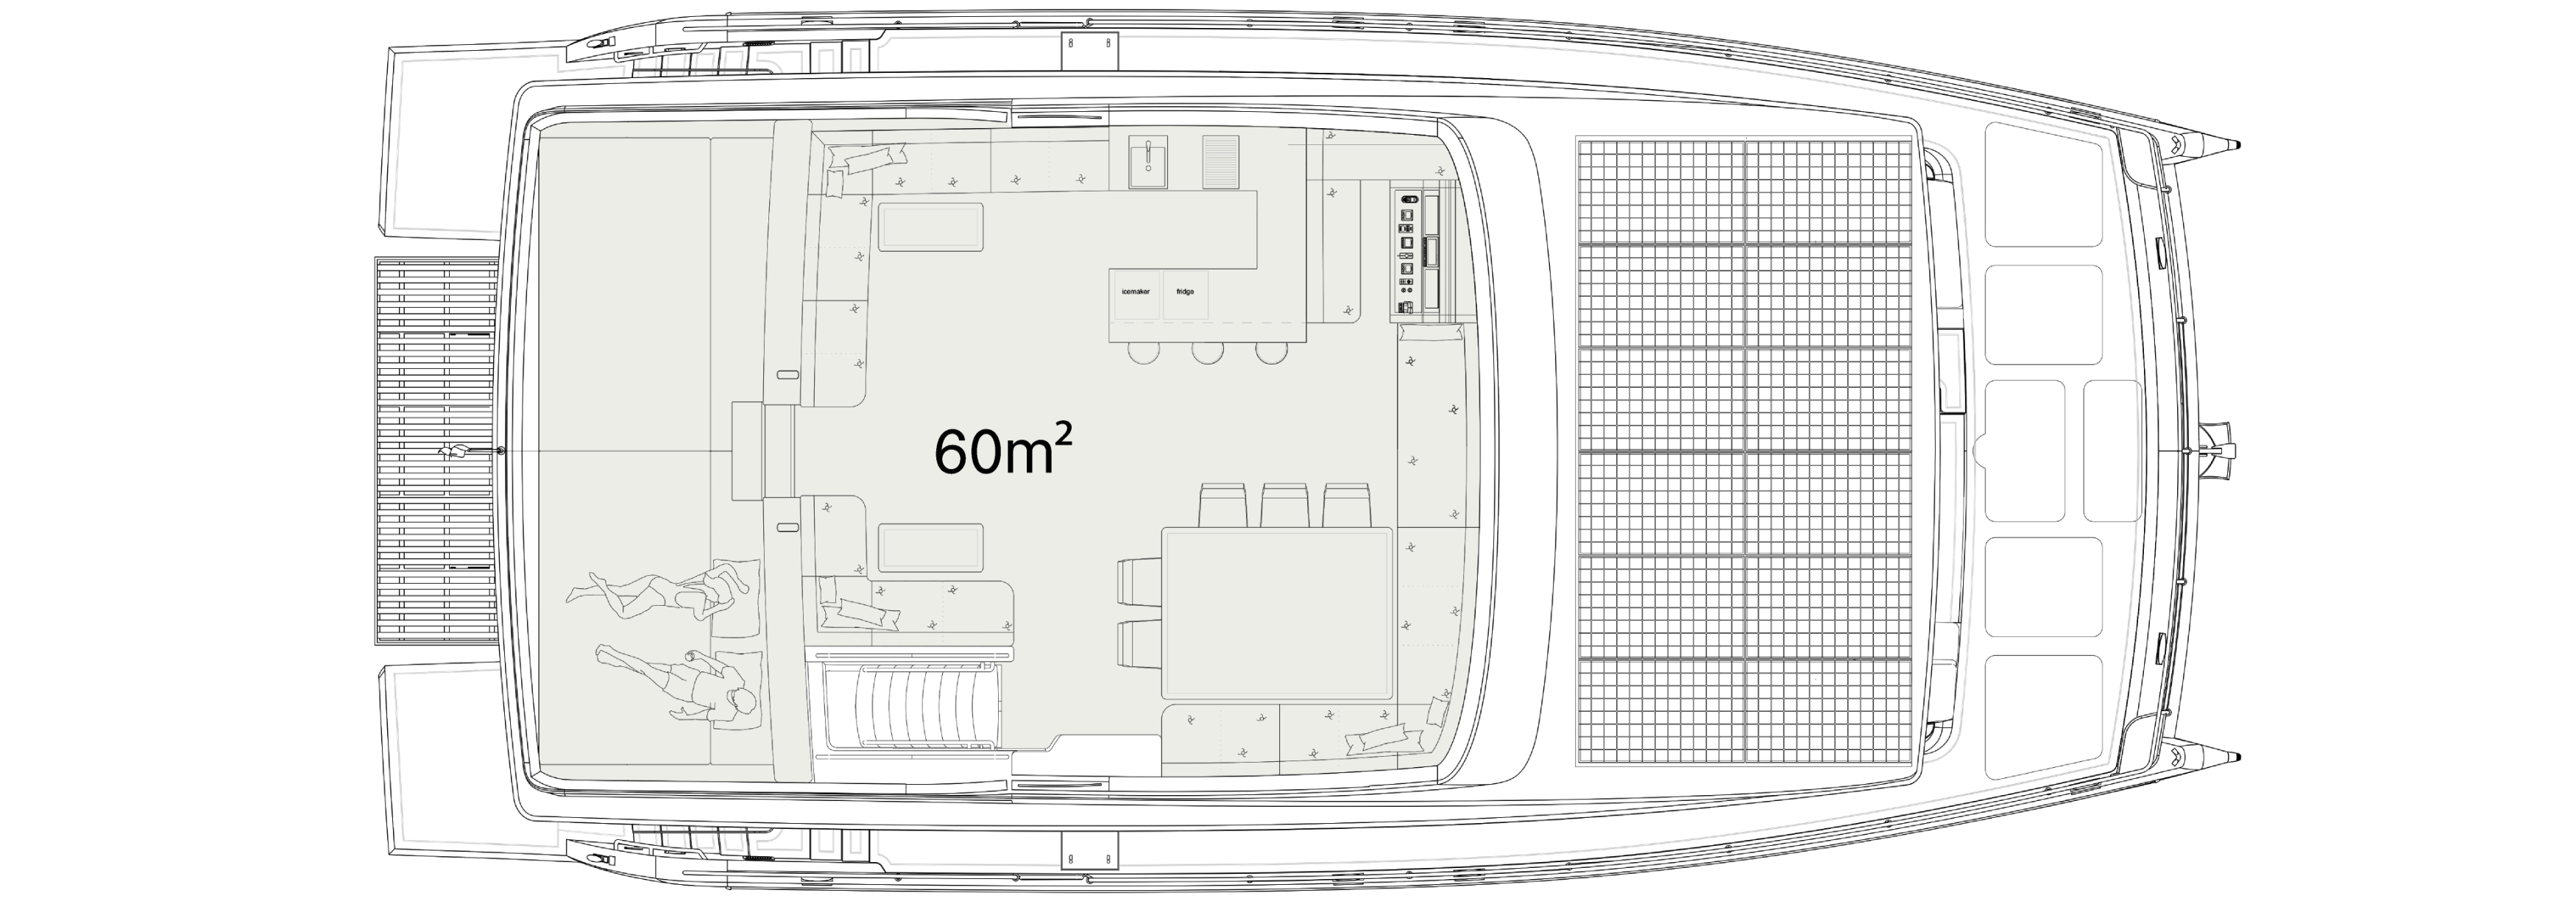 Yacht sky lounge plane area